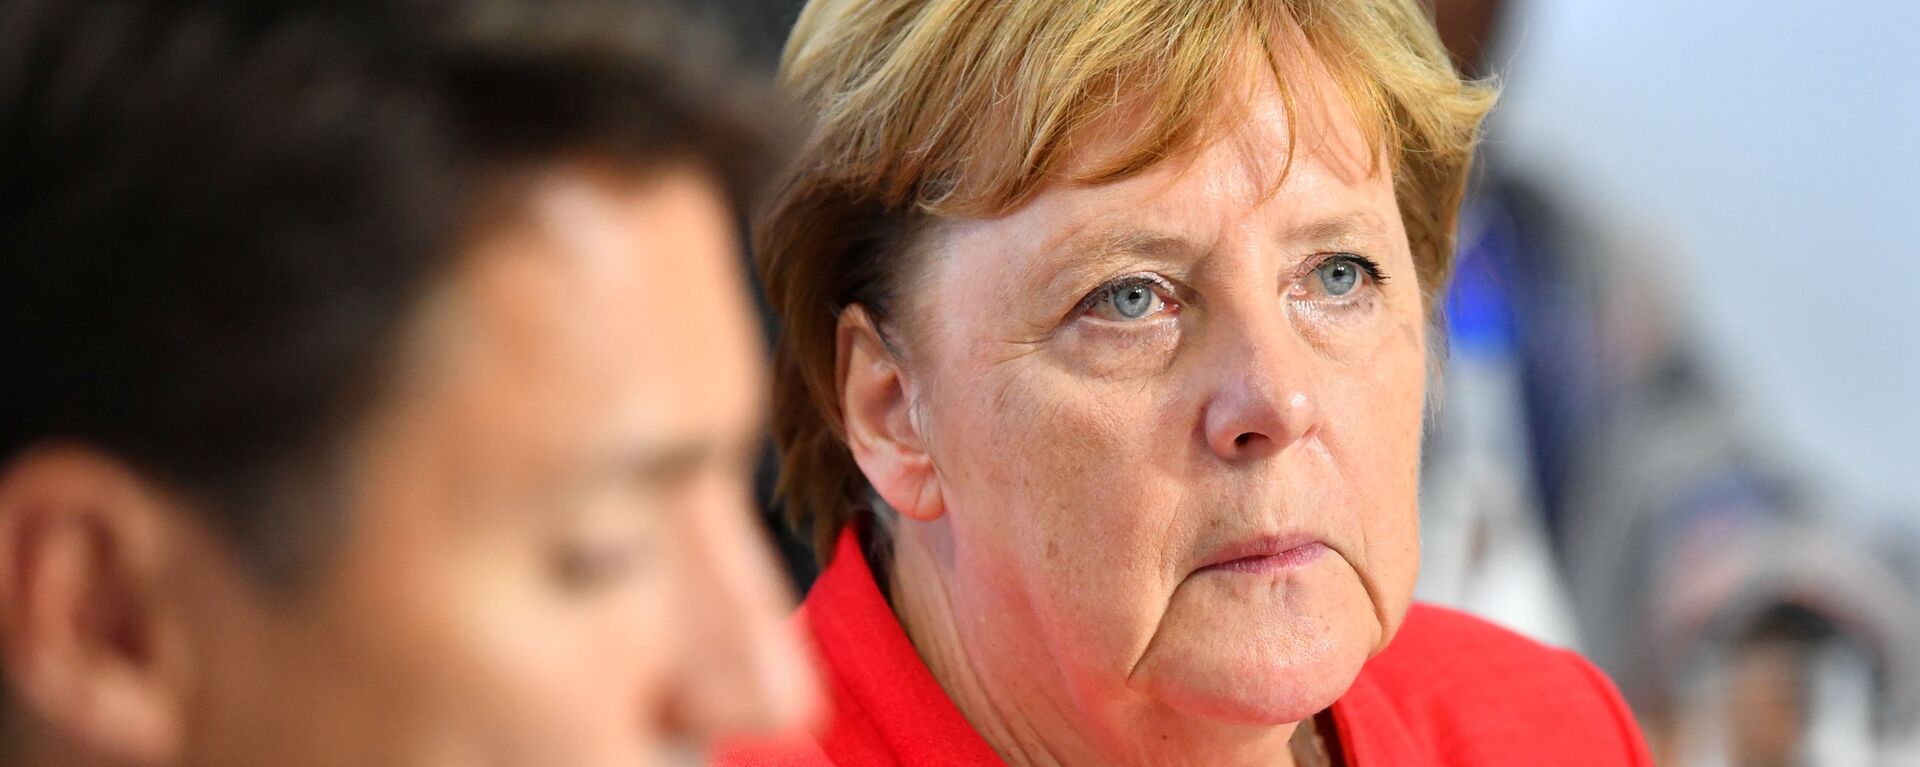 Angela Merkel, la canciller de Alemania - Sputnik Mundo, 1920, 31.05.2021